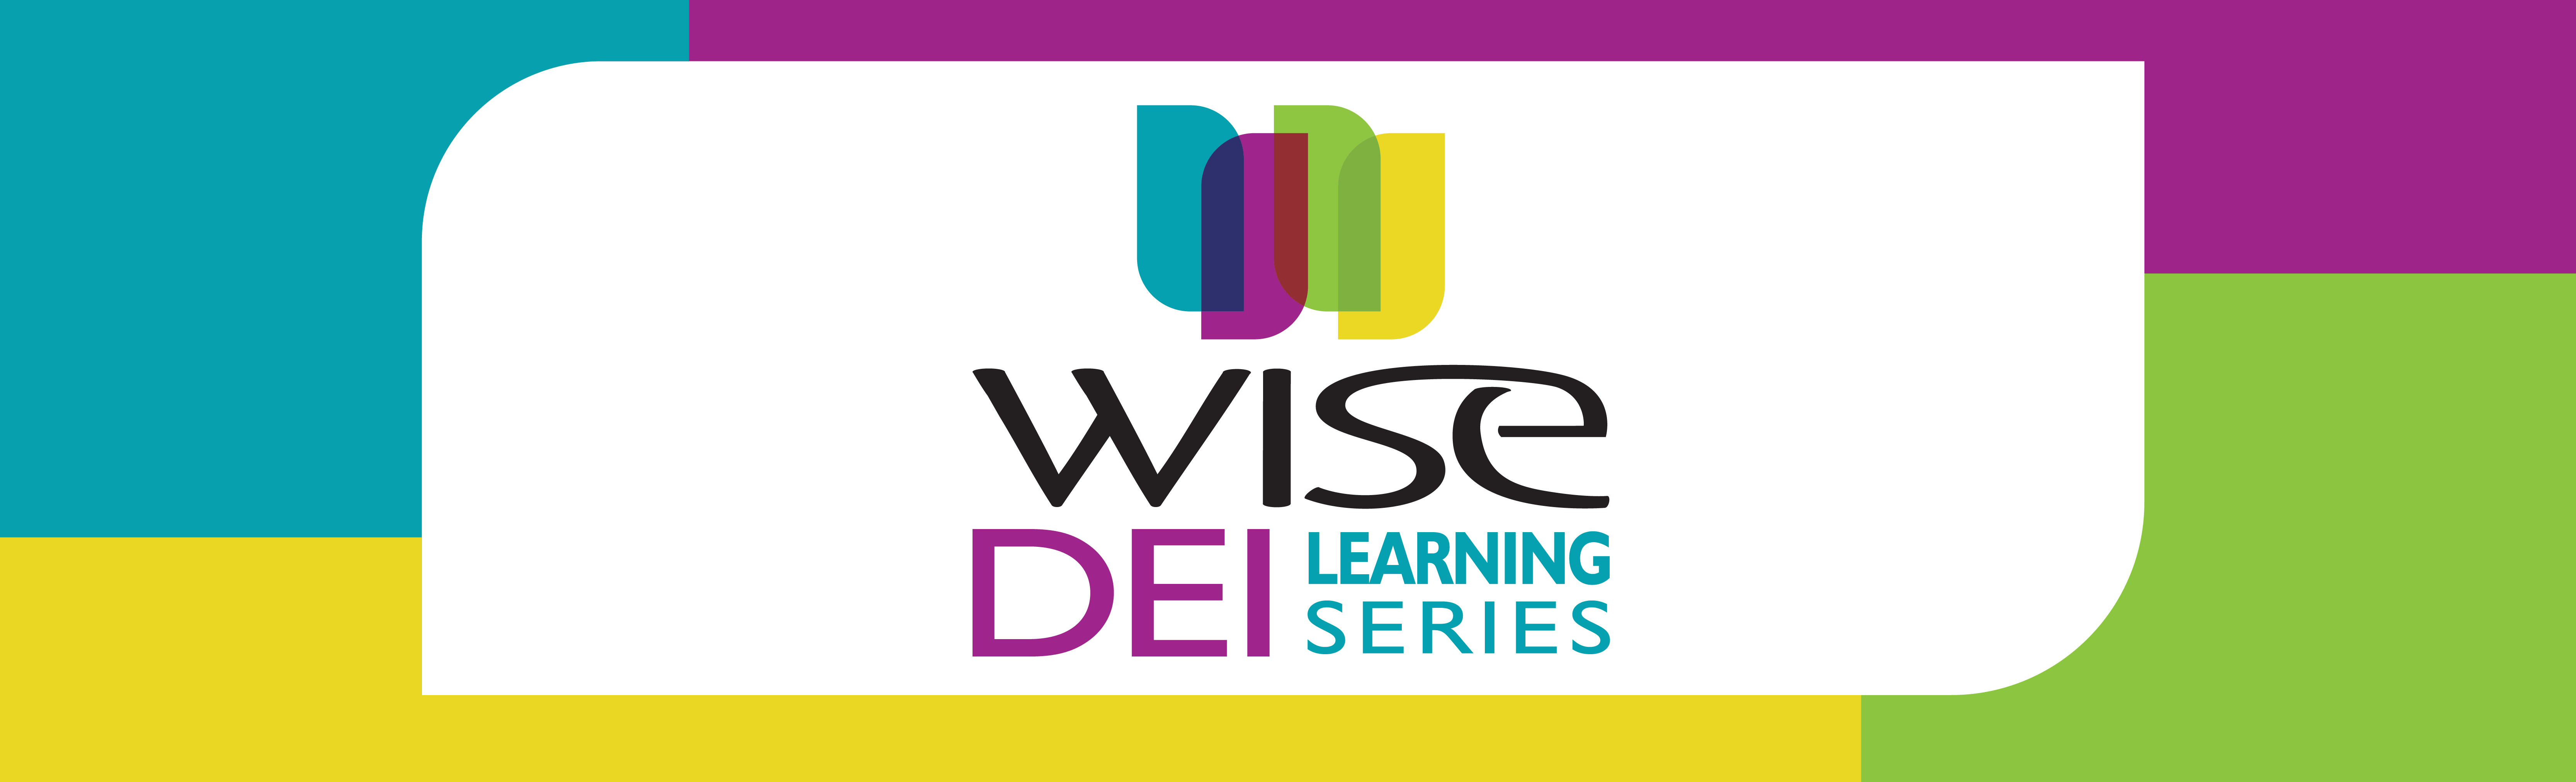 2021 WISE Web Headers DEI LEARNING SERIES